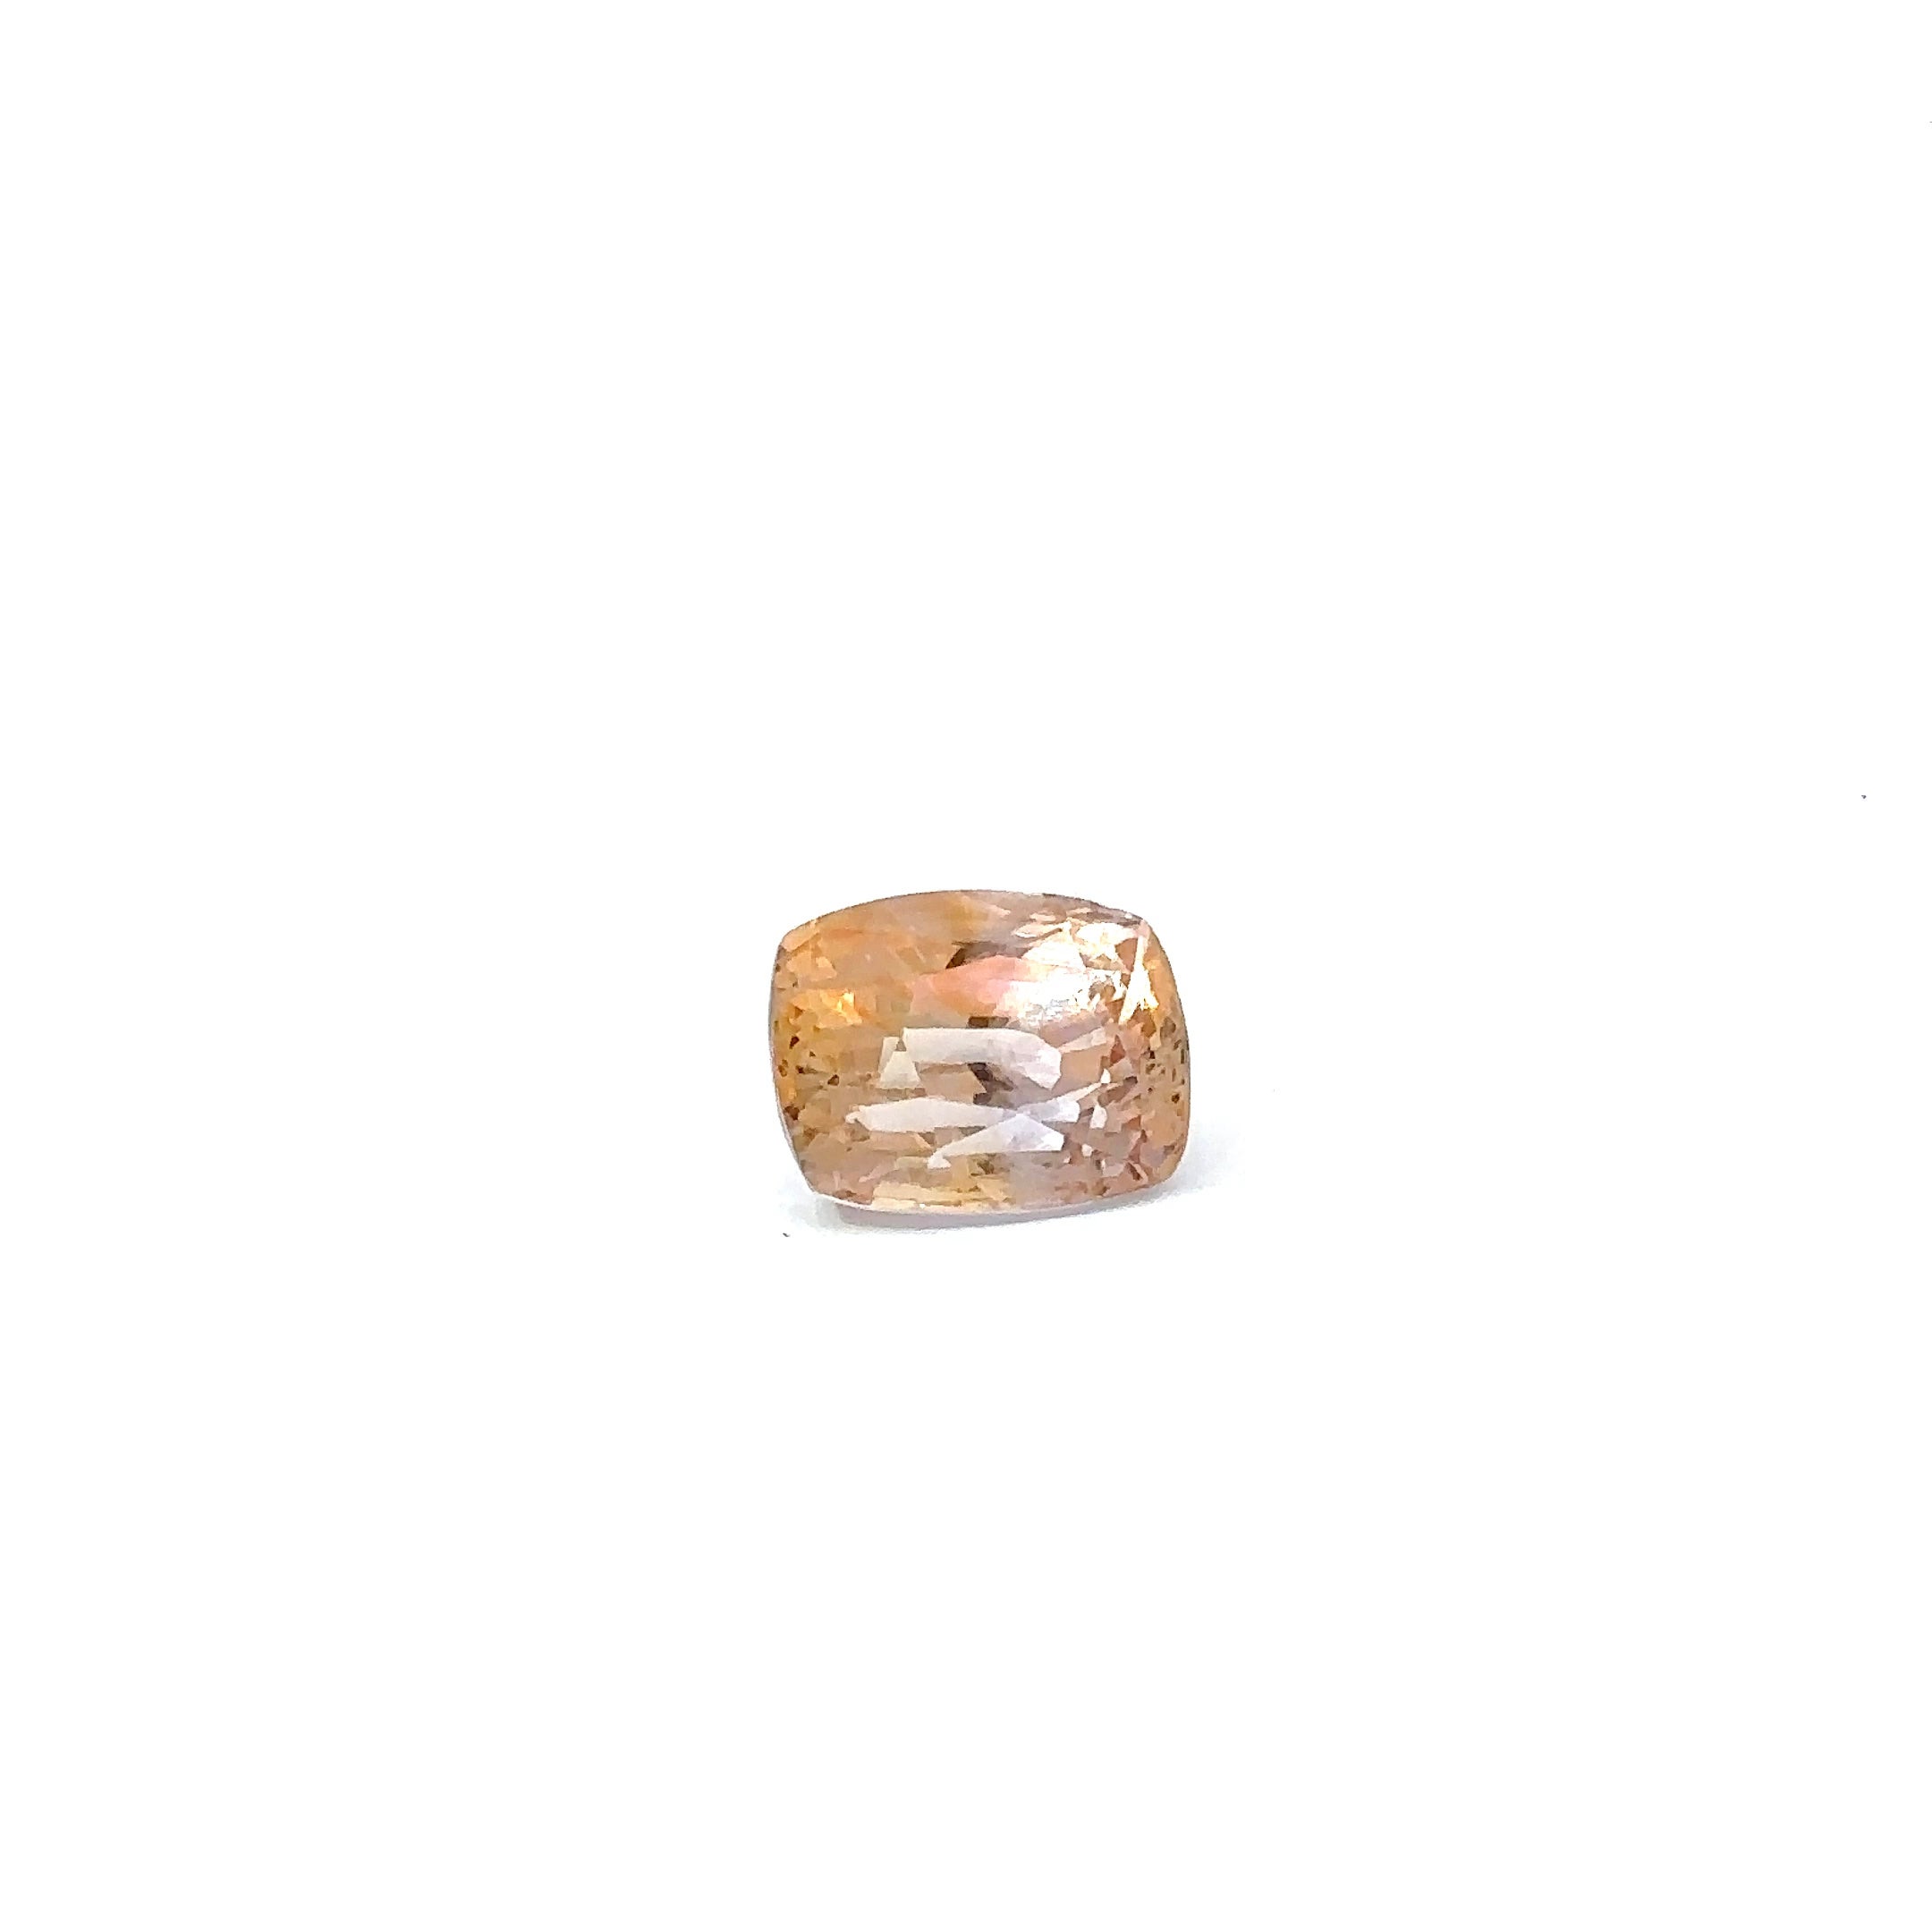 Corindon naturel Saphir 
Forme coussin Coupe brillante
Transparent
Jaune orangé
6,16 carats
